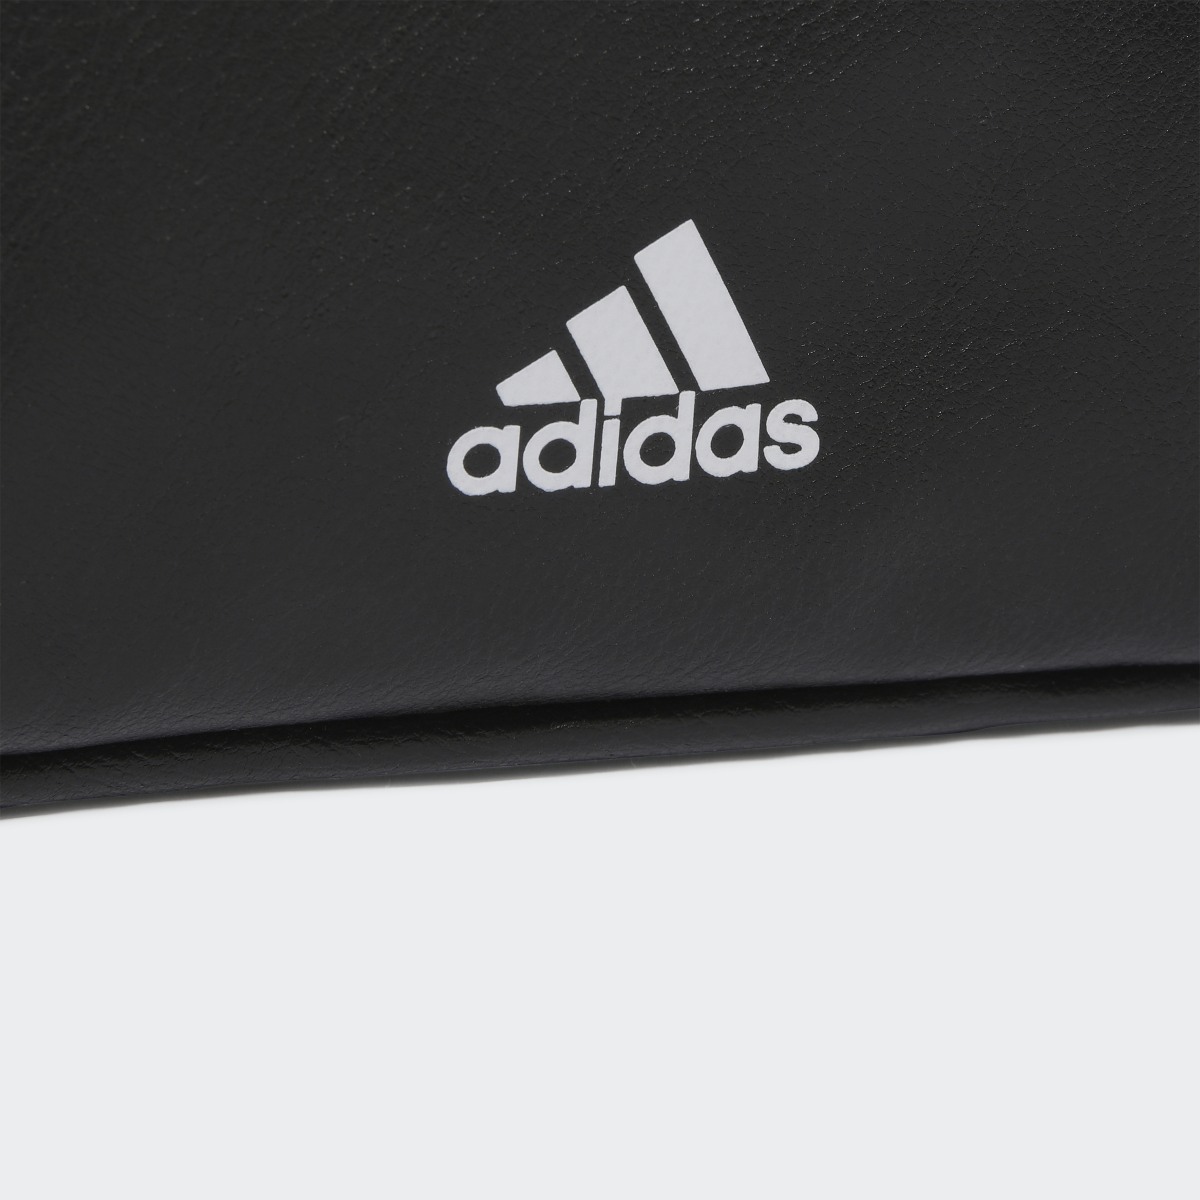 Adidas Unisex PU Kettle Bag. 6